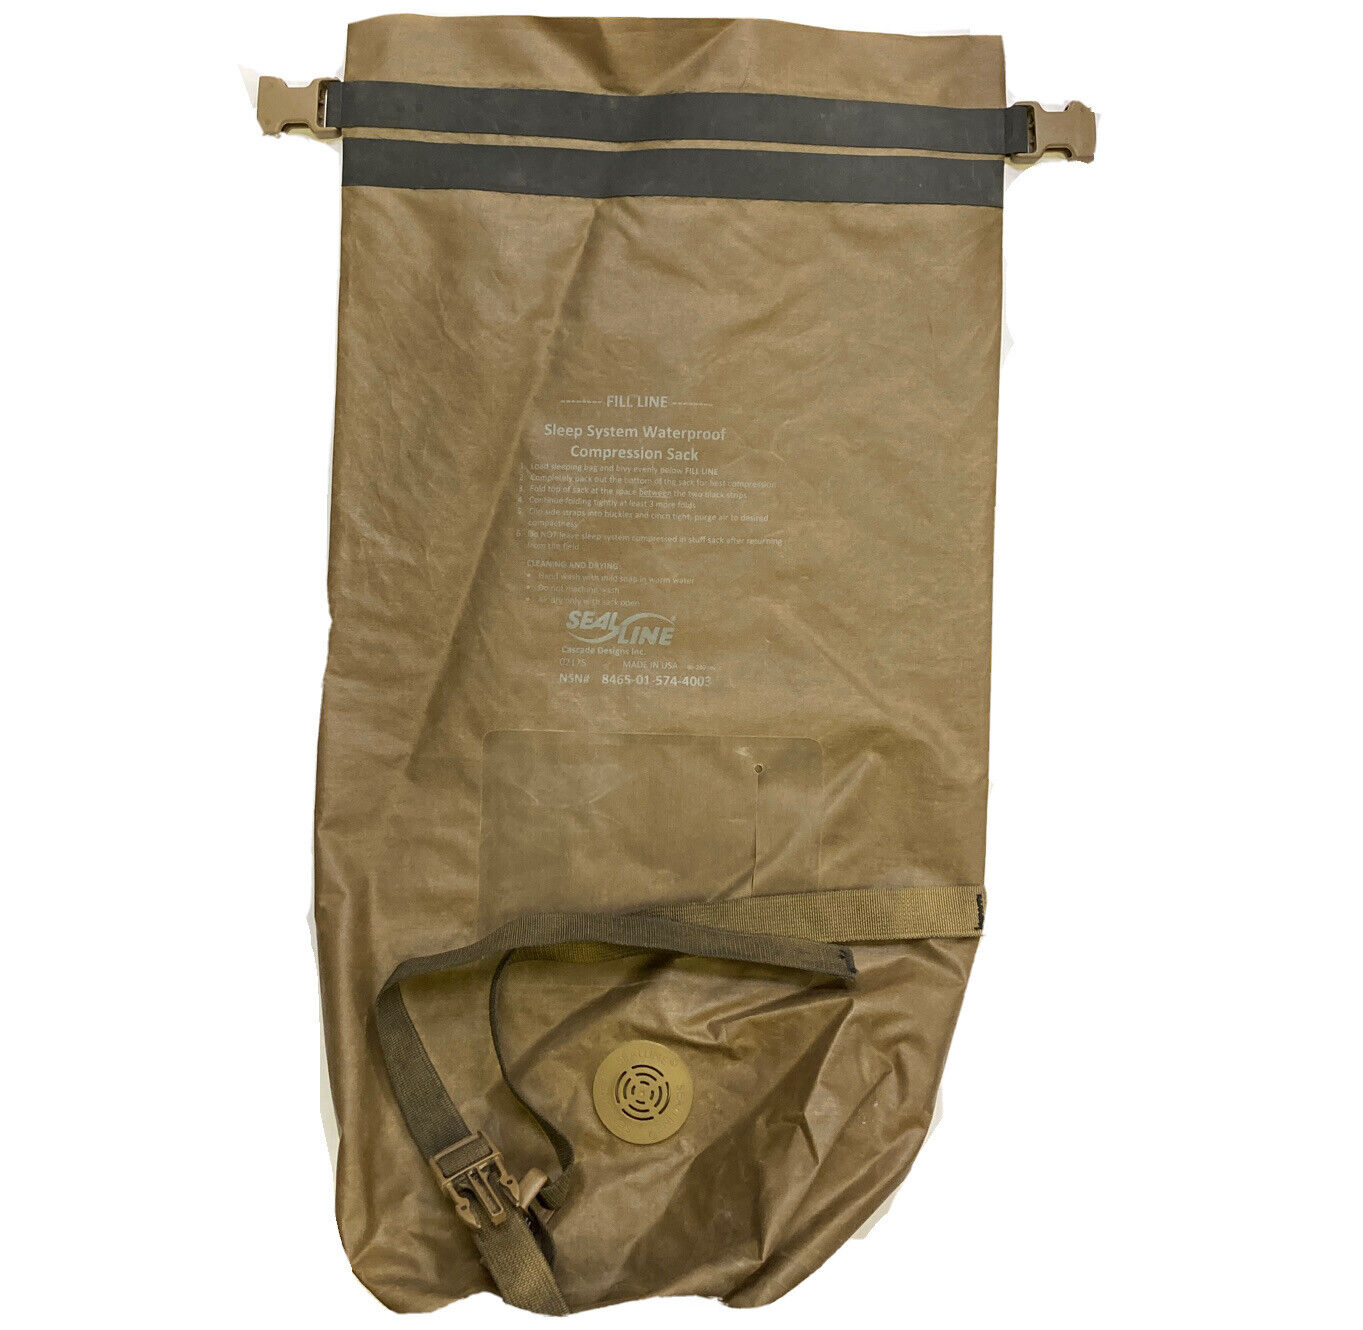 USMC Usgi SEALLINE 3 SEASON Waterproof SLEEP System COYOTE Compression Sack Bag